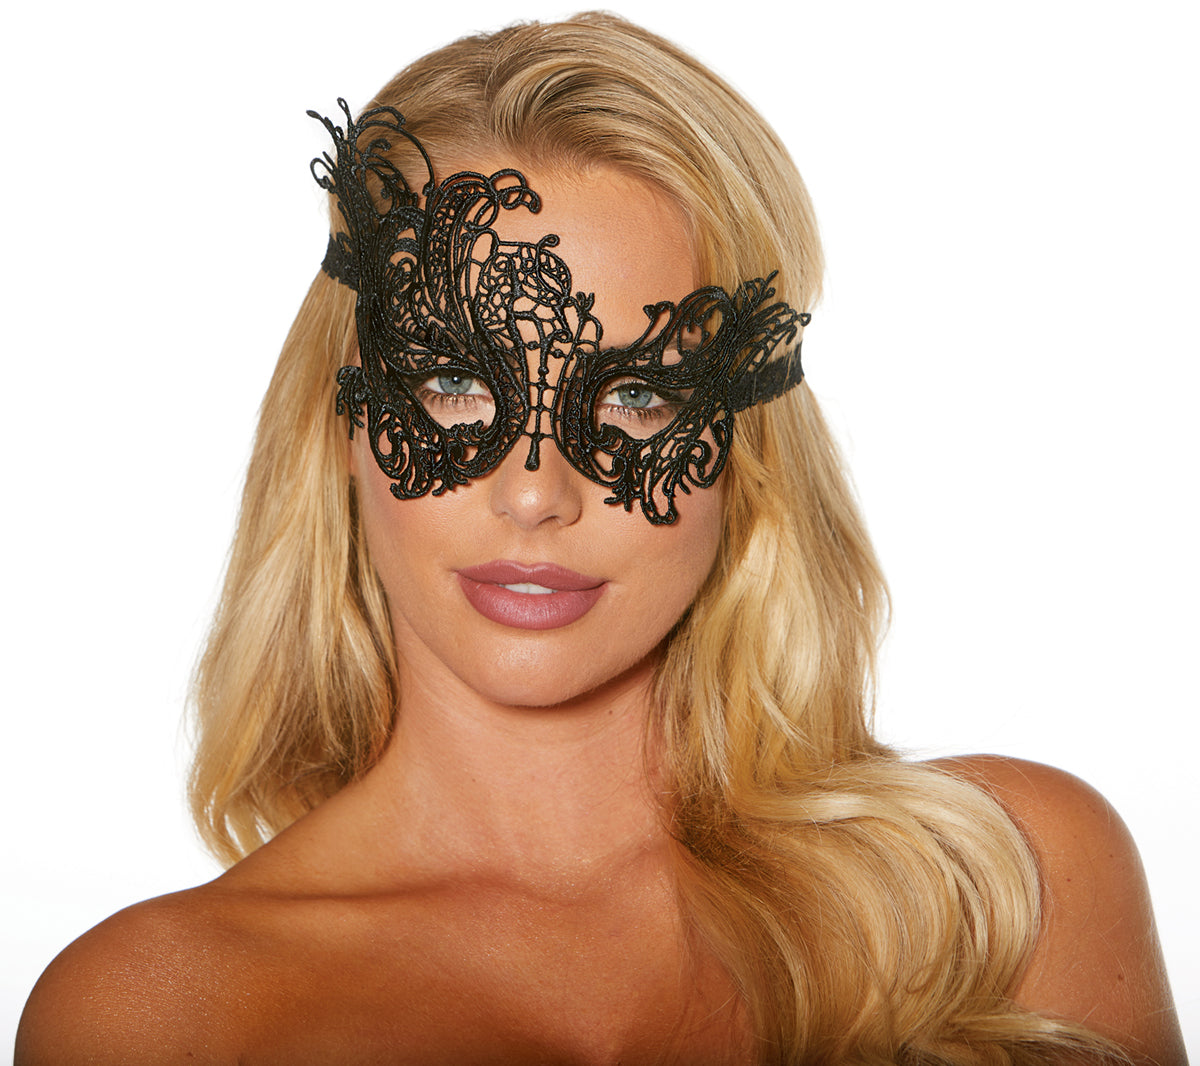 Маска завязки. Кружевная маска. Ажурная маска. Маска венецианская ажурная. Ажурные маски для карнавала.